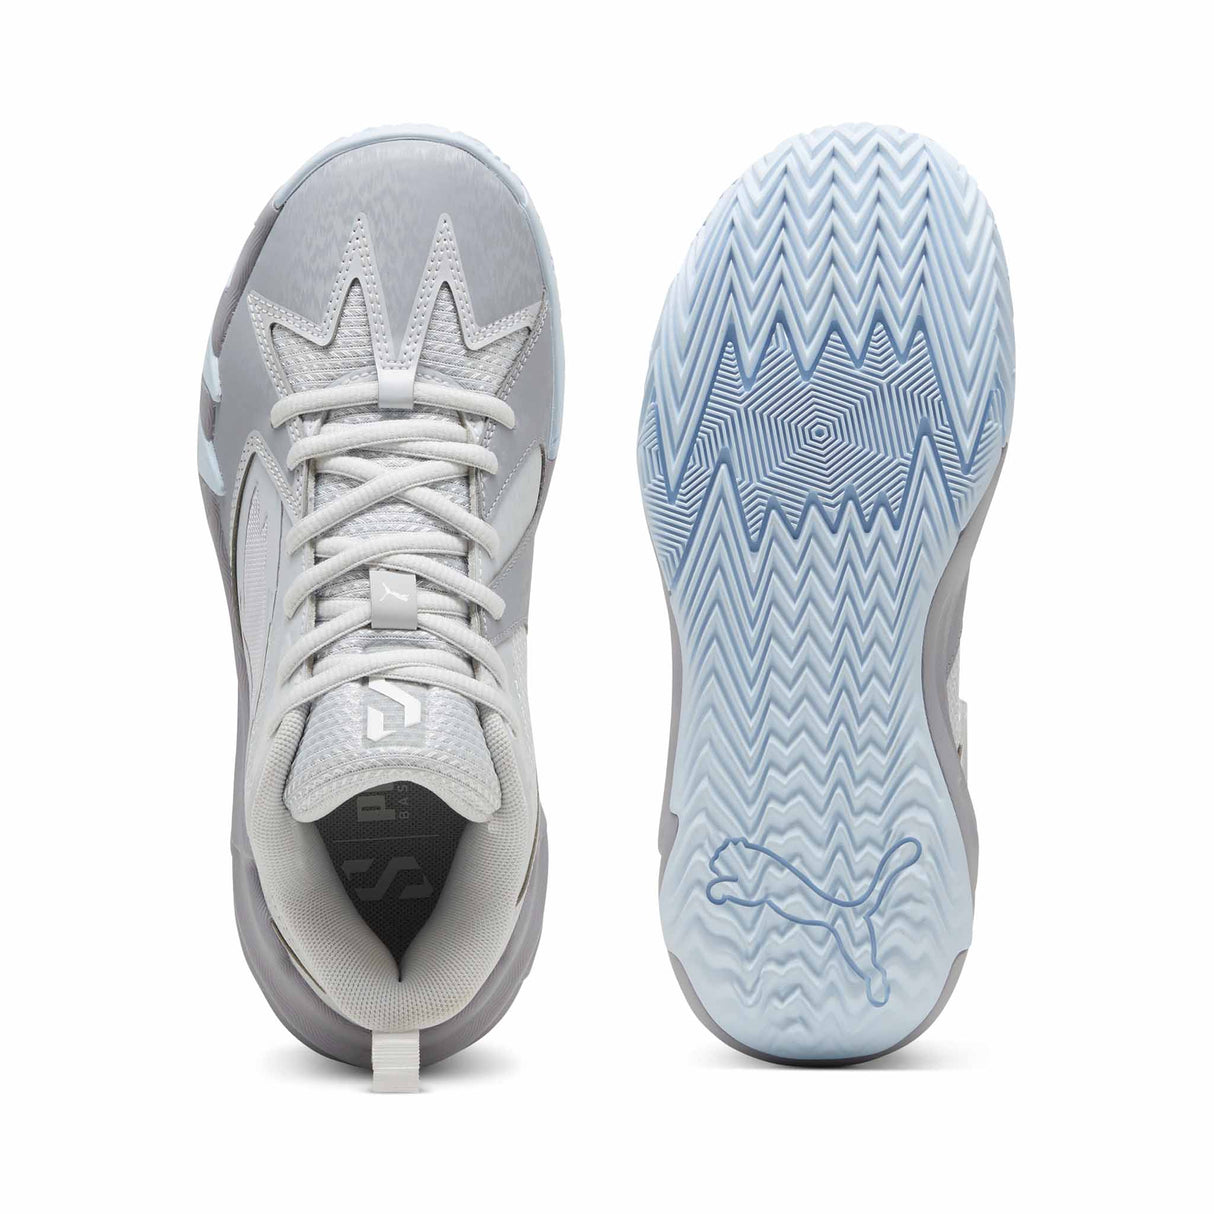 Puma Scoot Zero Grey Ice chaussures de basketball pour enfant - Grey Ice